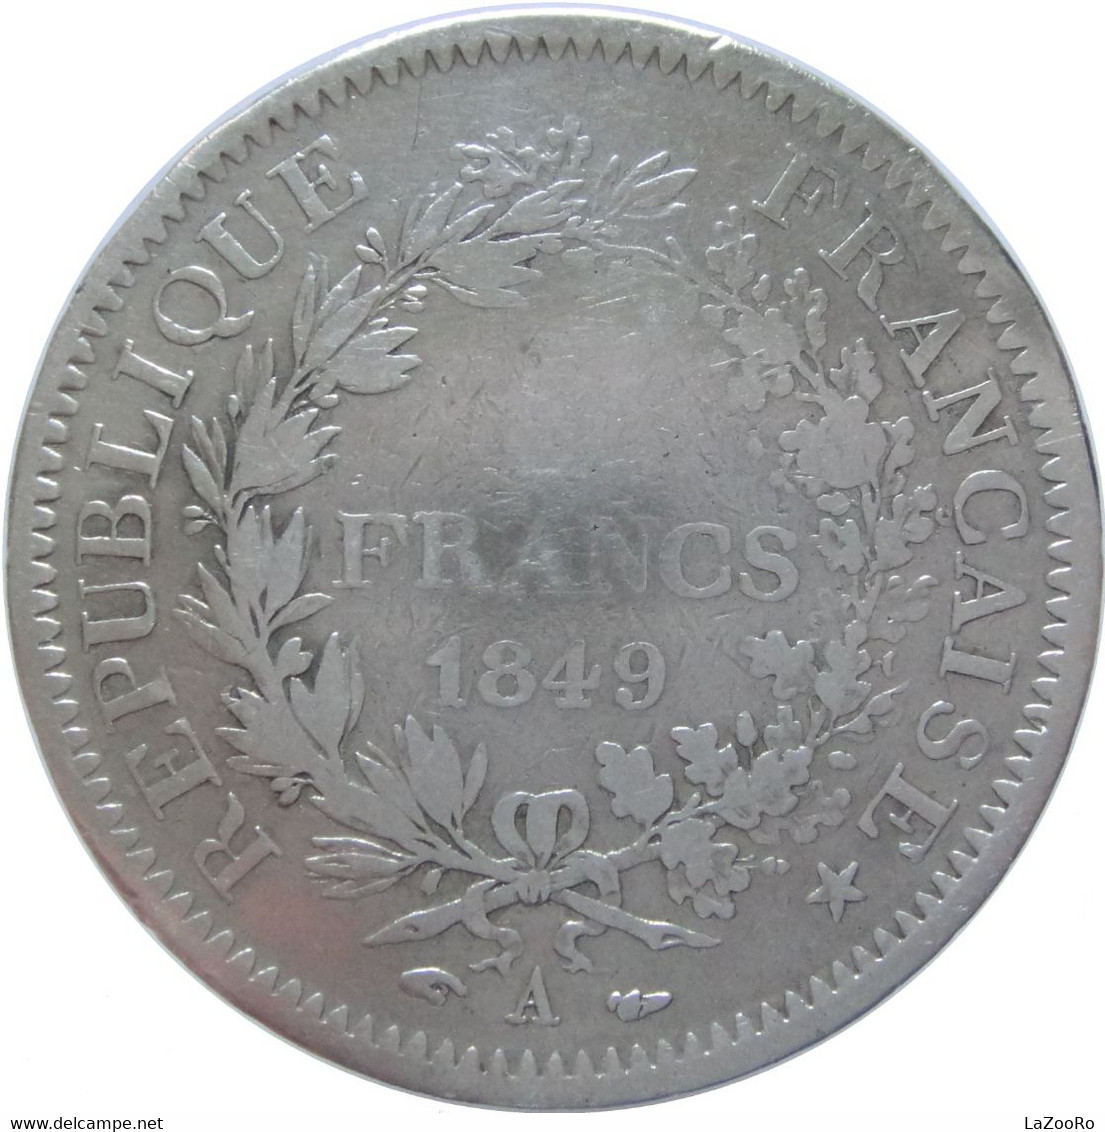 LaZooRo: France 5 Francs 1849 A F - Silver - 5 Francs